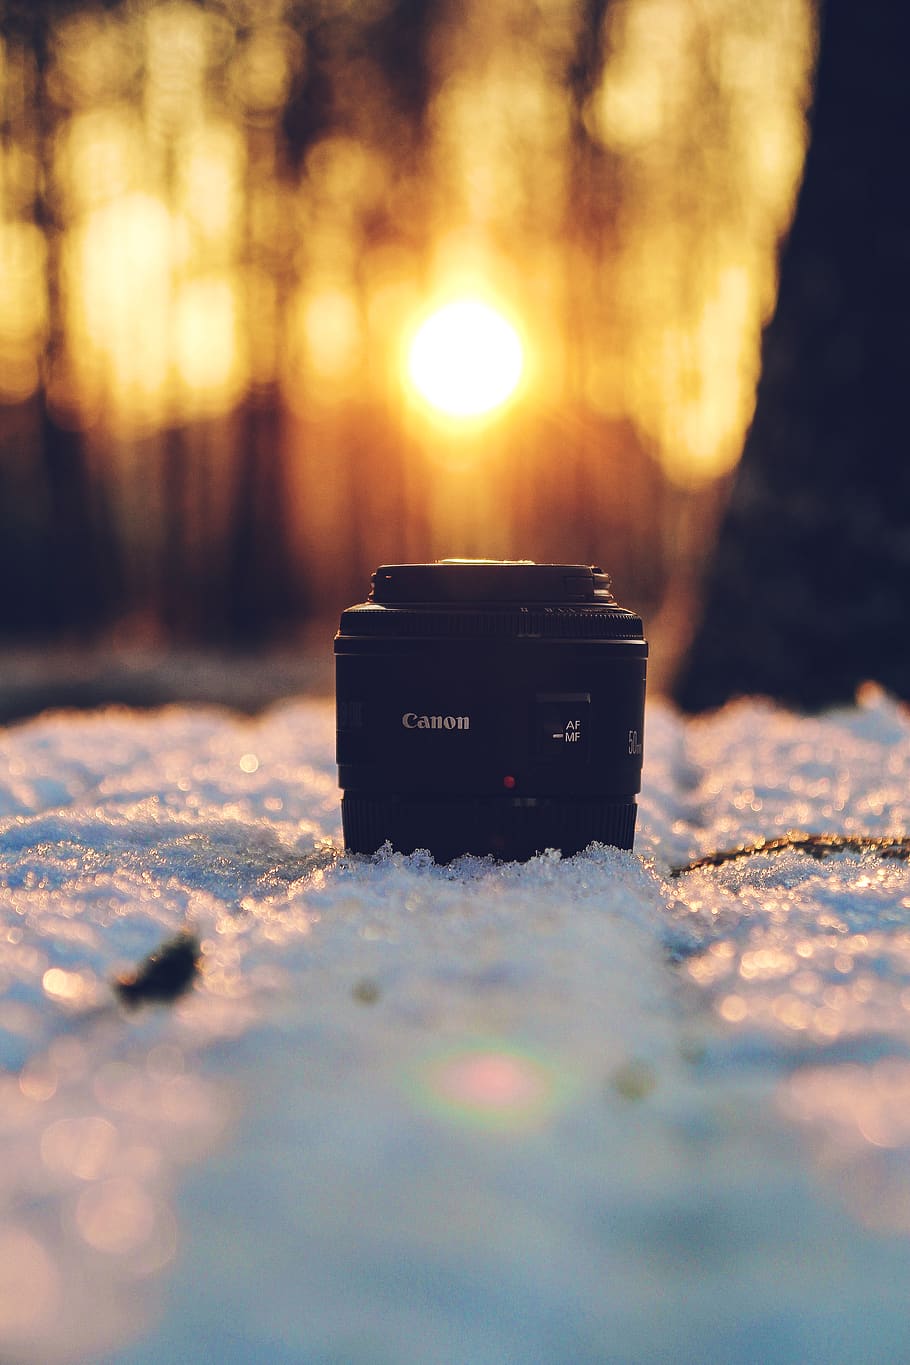 black Canon DSLR camera lens on snow, electronics, photography